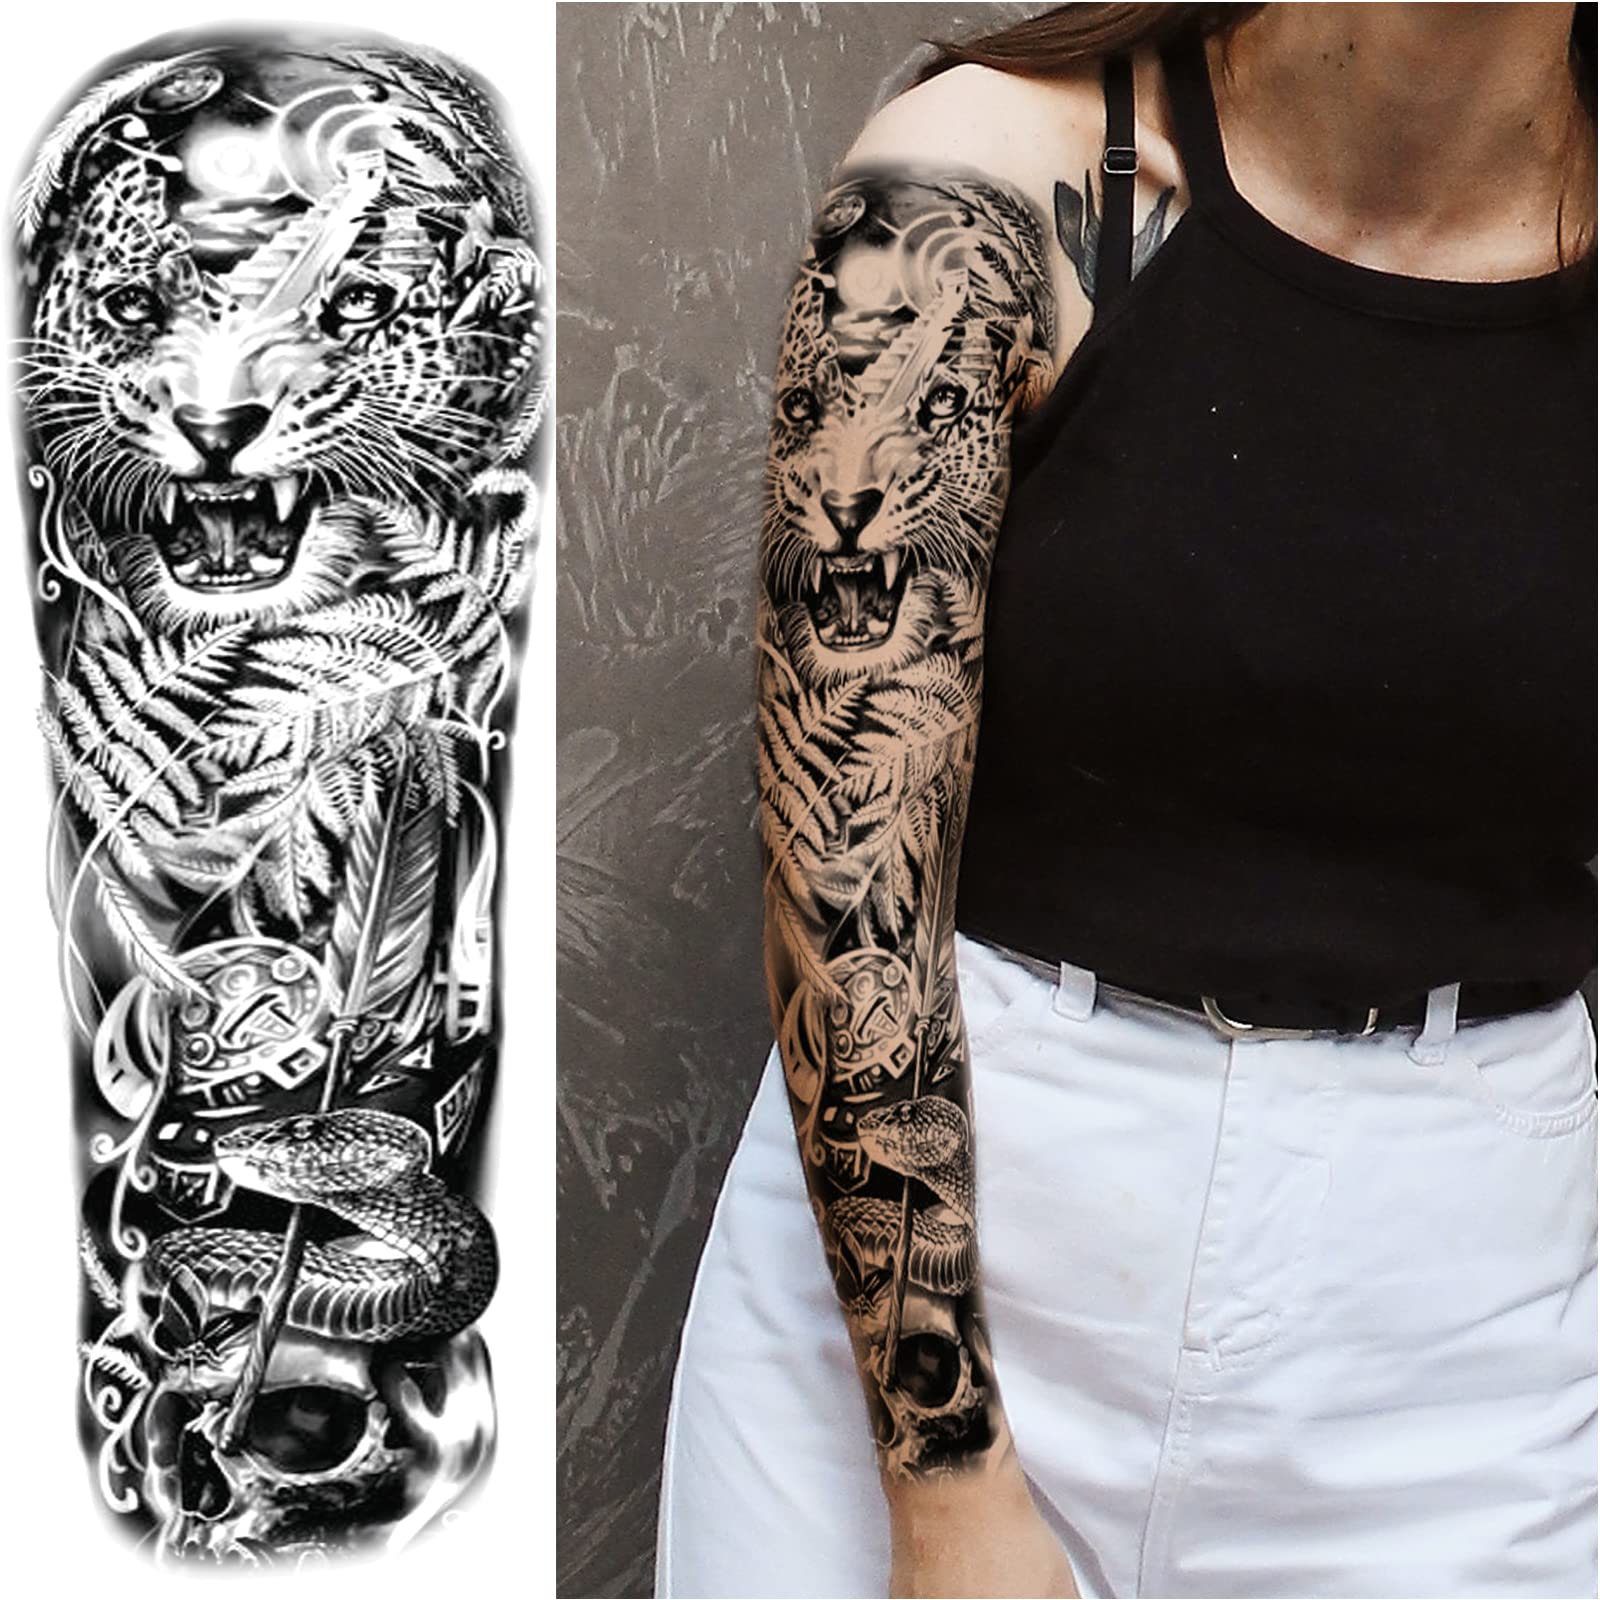 Lion Wolf Fake Tattoos Sleeve Stickers, Full Arm Dragon Animal Tribal Temporary Tattoo Sleeves For Men Women Adults, Long Lasting Large Black Eagle Leopard Temp Tattoo Leg Body Art Makeup, 8-Sheet